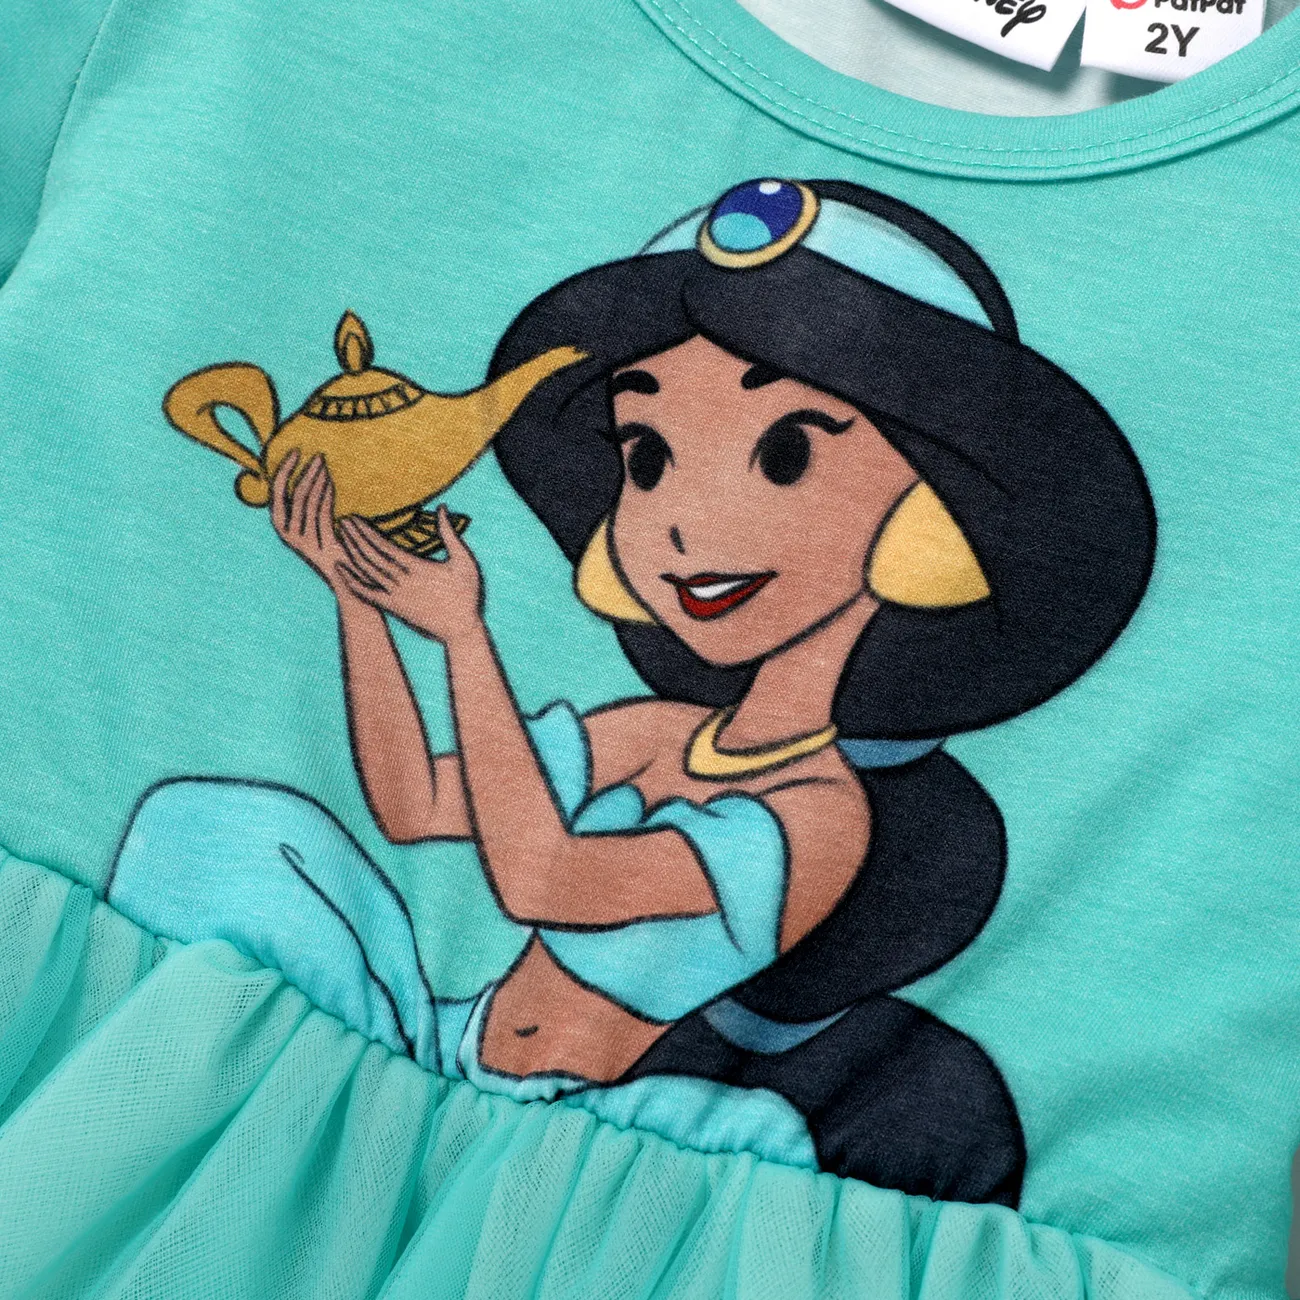 Disney Princess Niño pequeño Chica Costura de tela Dulce Vestidos Turquesa big image 1